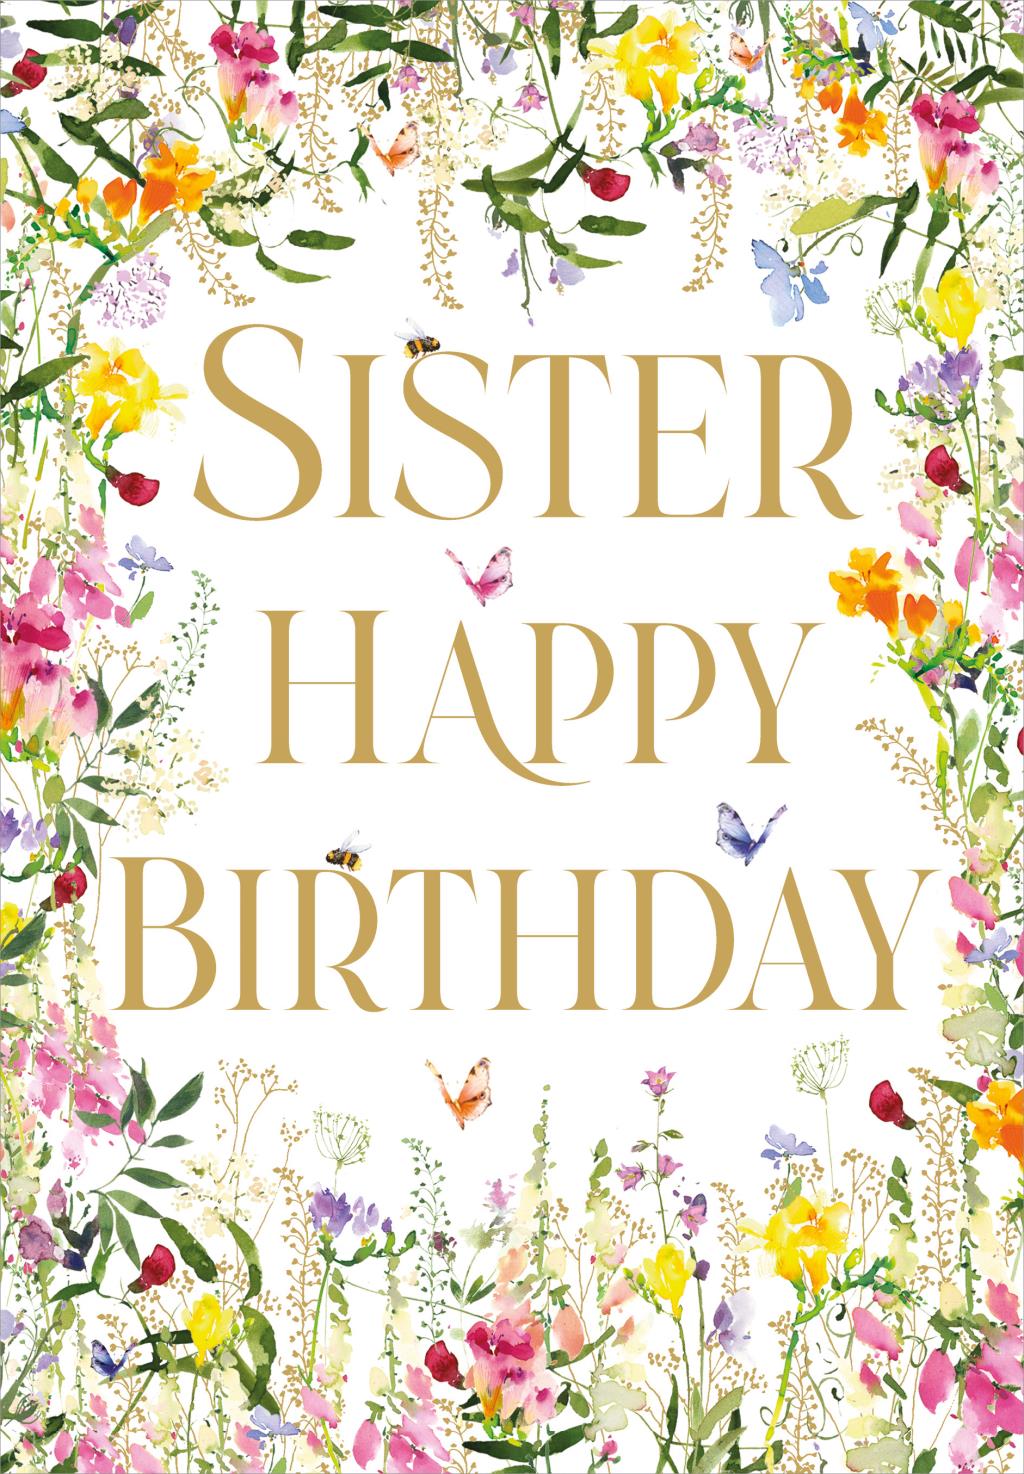 cumpleaños de la hermana